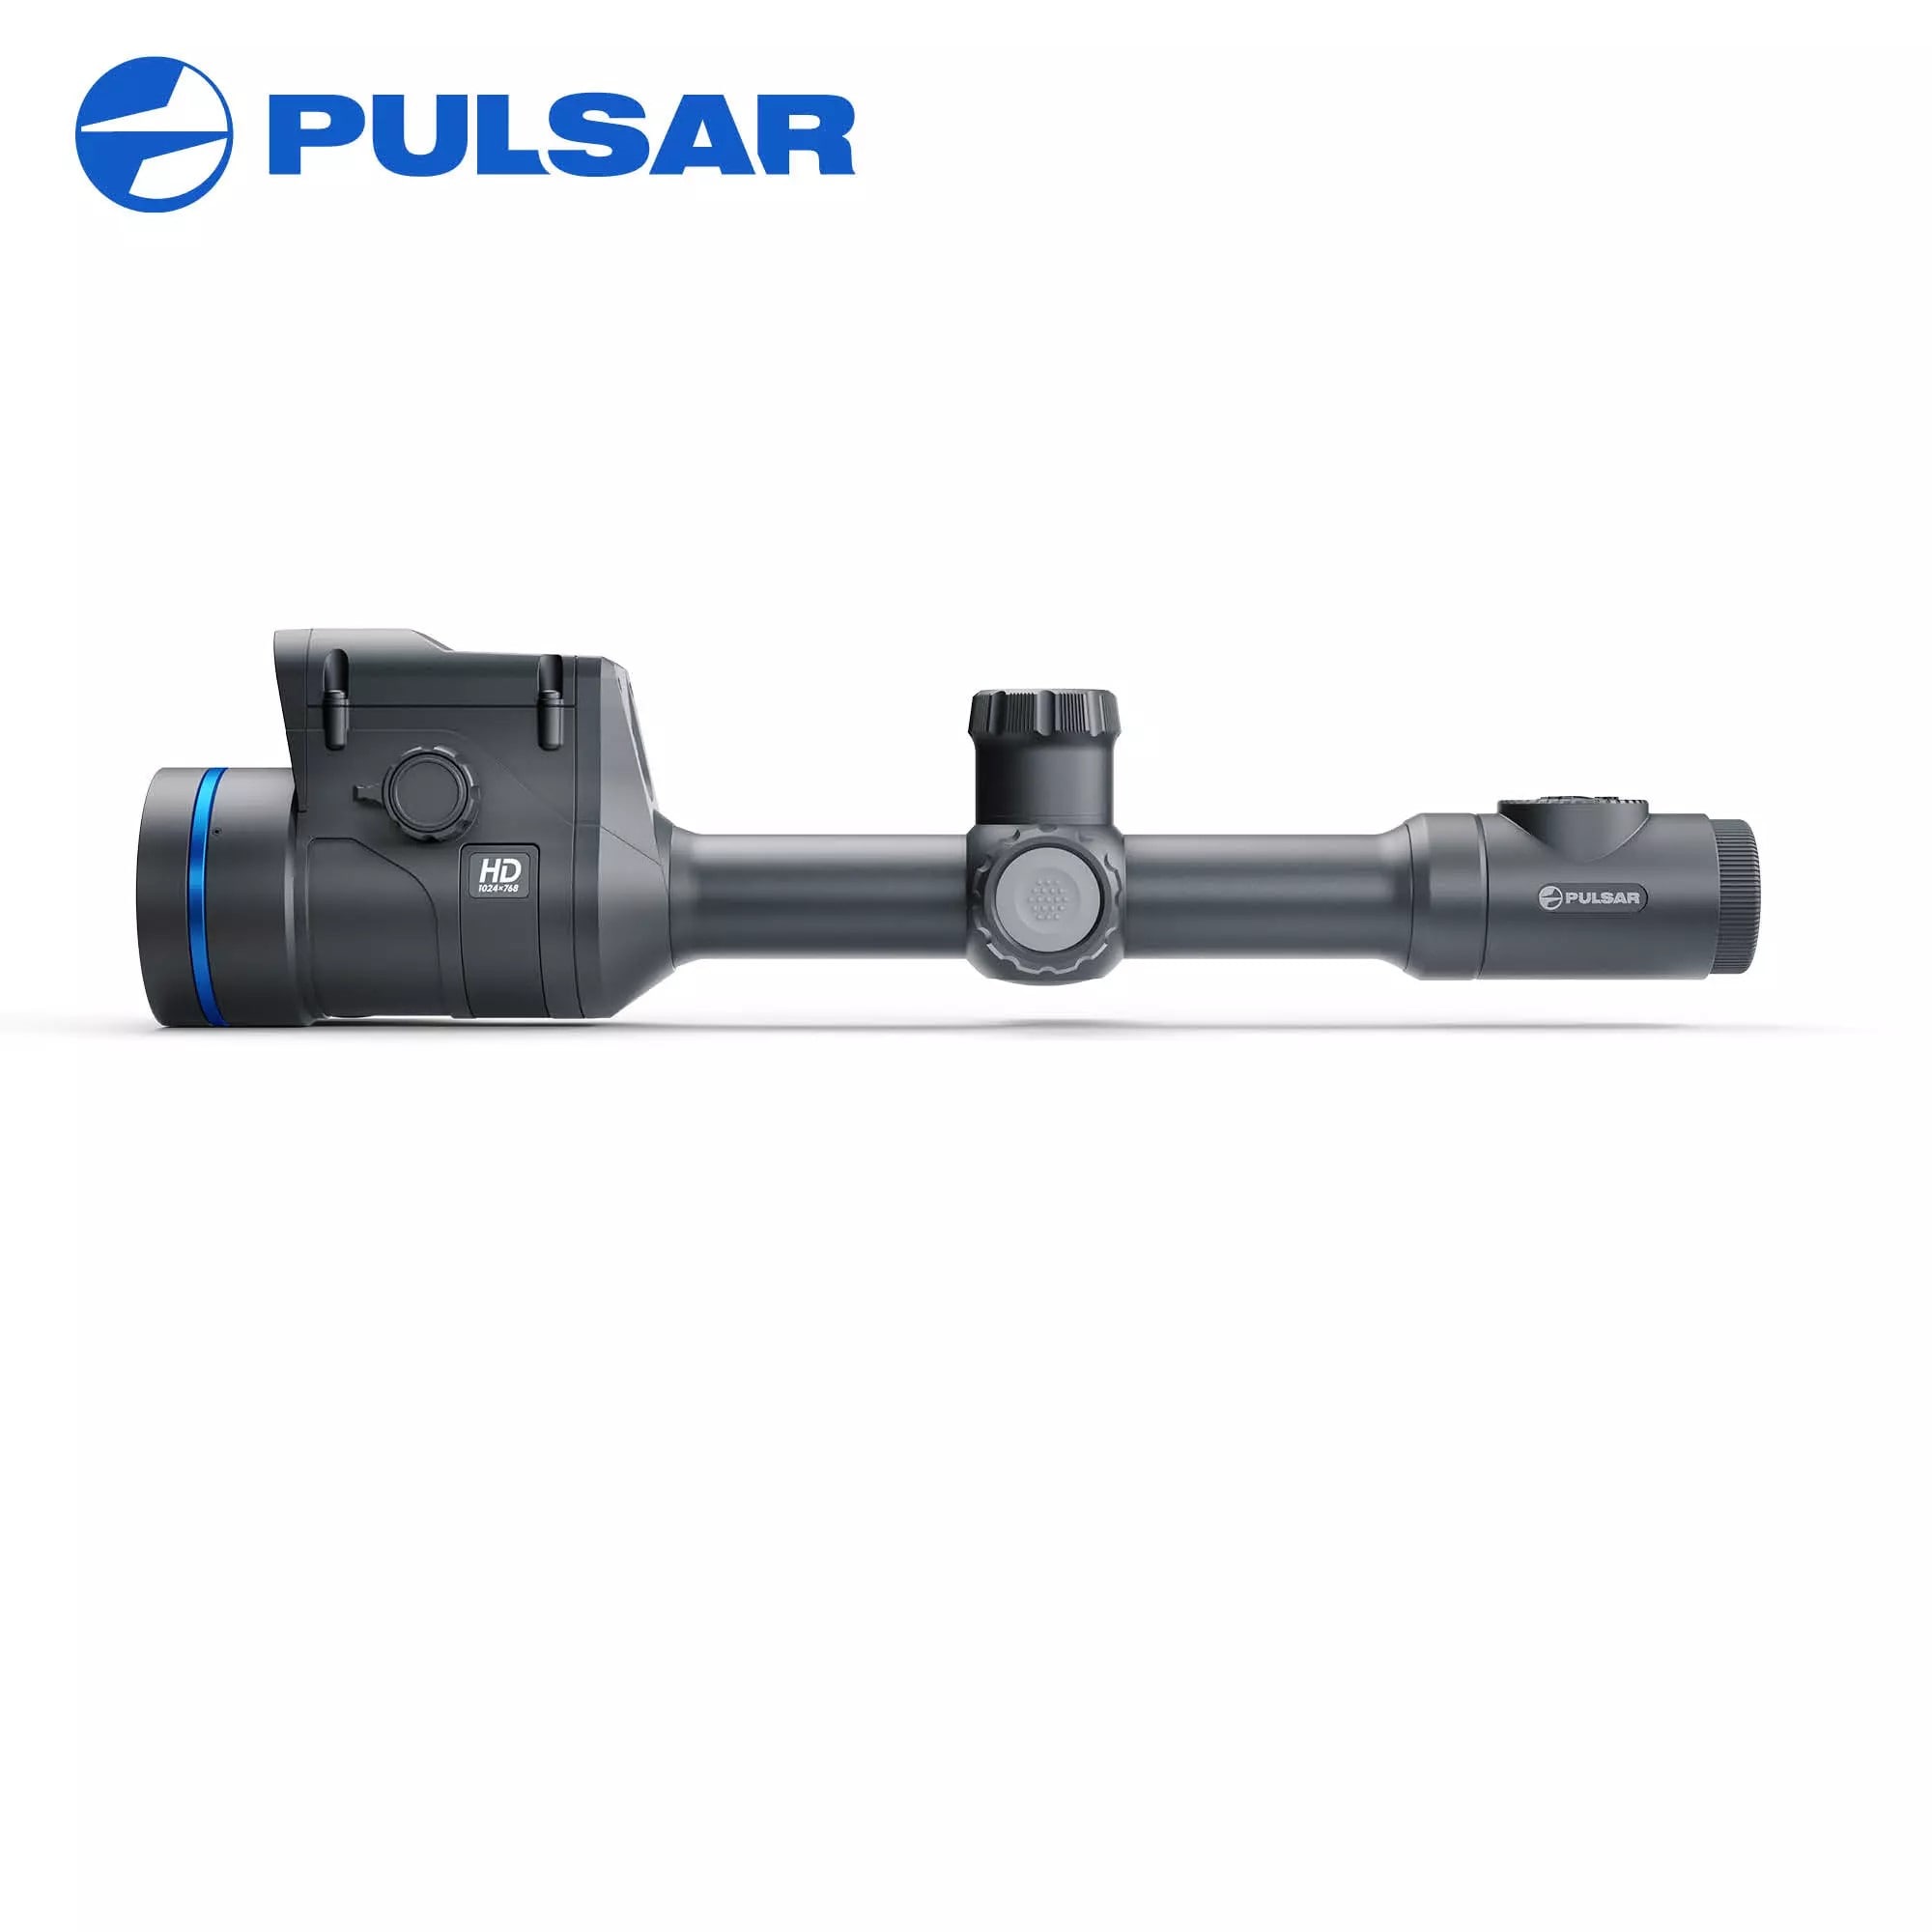 Pulsar Thermion 2 LRF XL50 Termisk Riflekikkert med HD-sensor